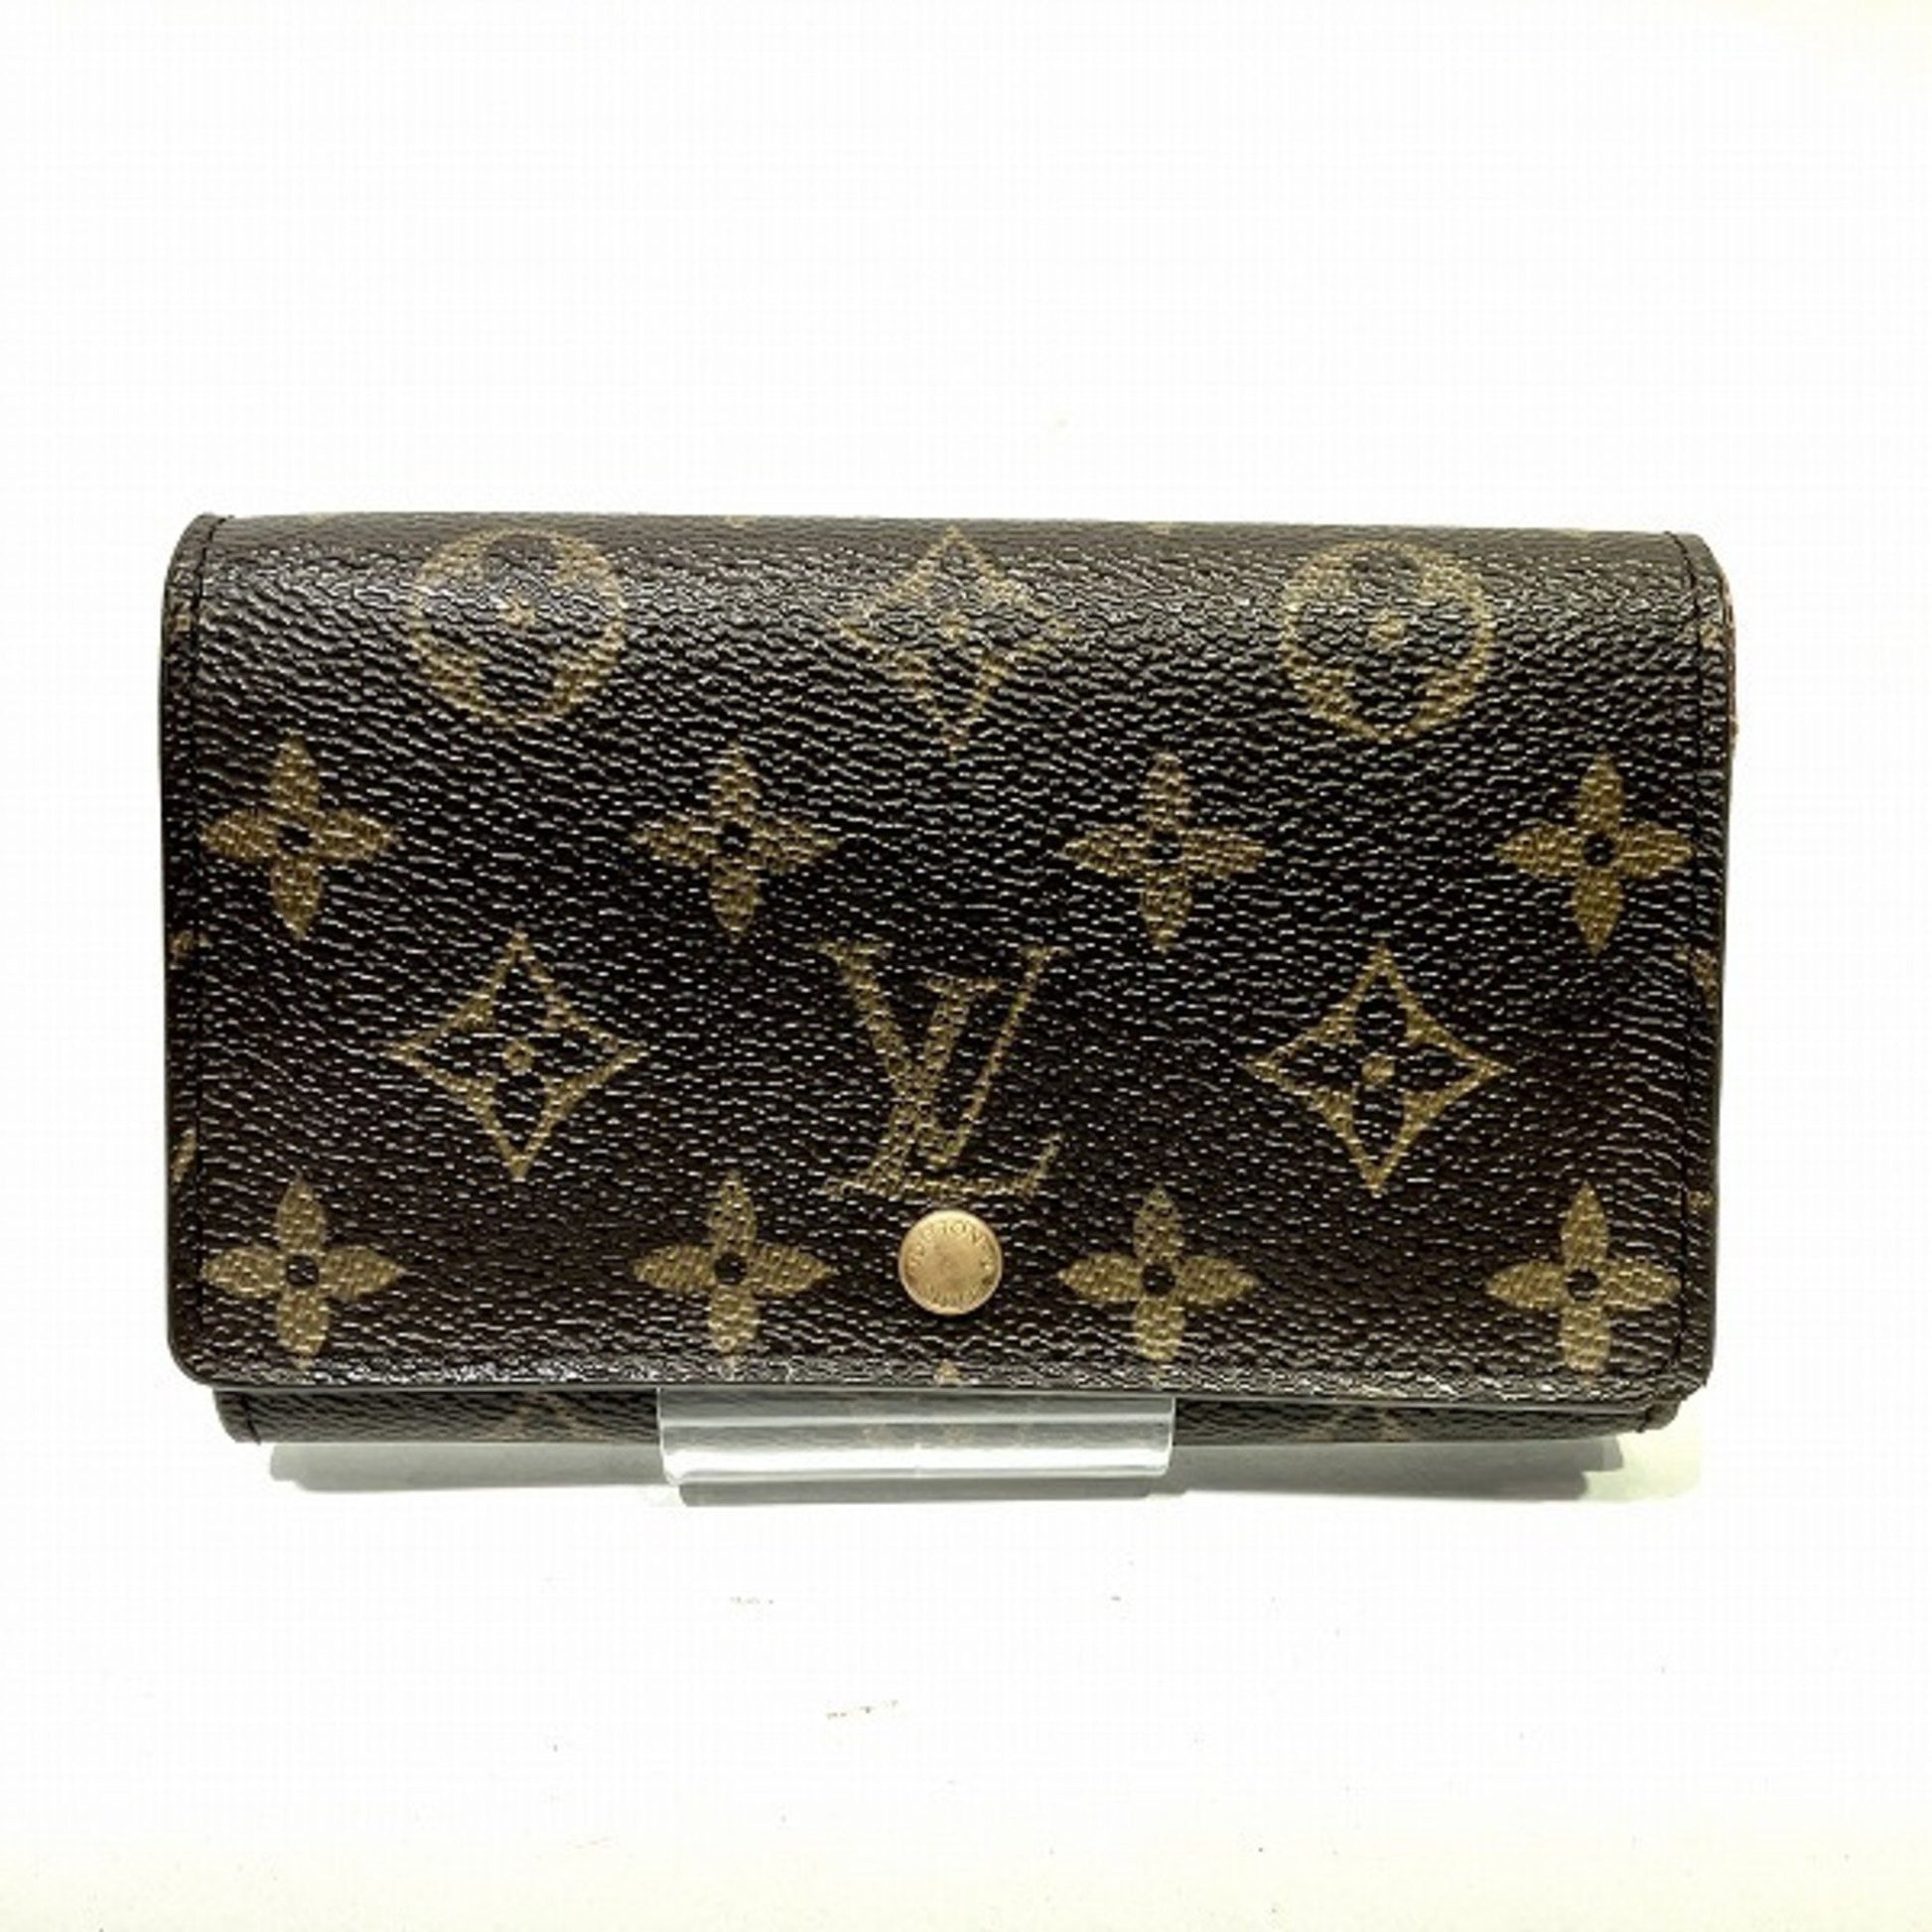 Authenticated Used Louis Vuitton Monogram Portomone Vietresor